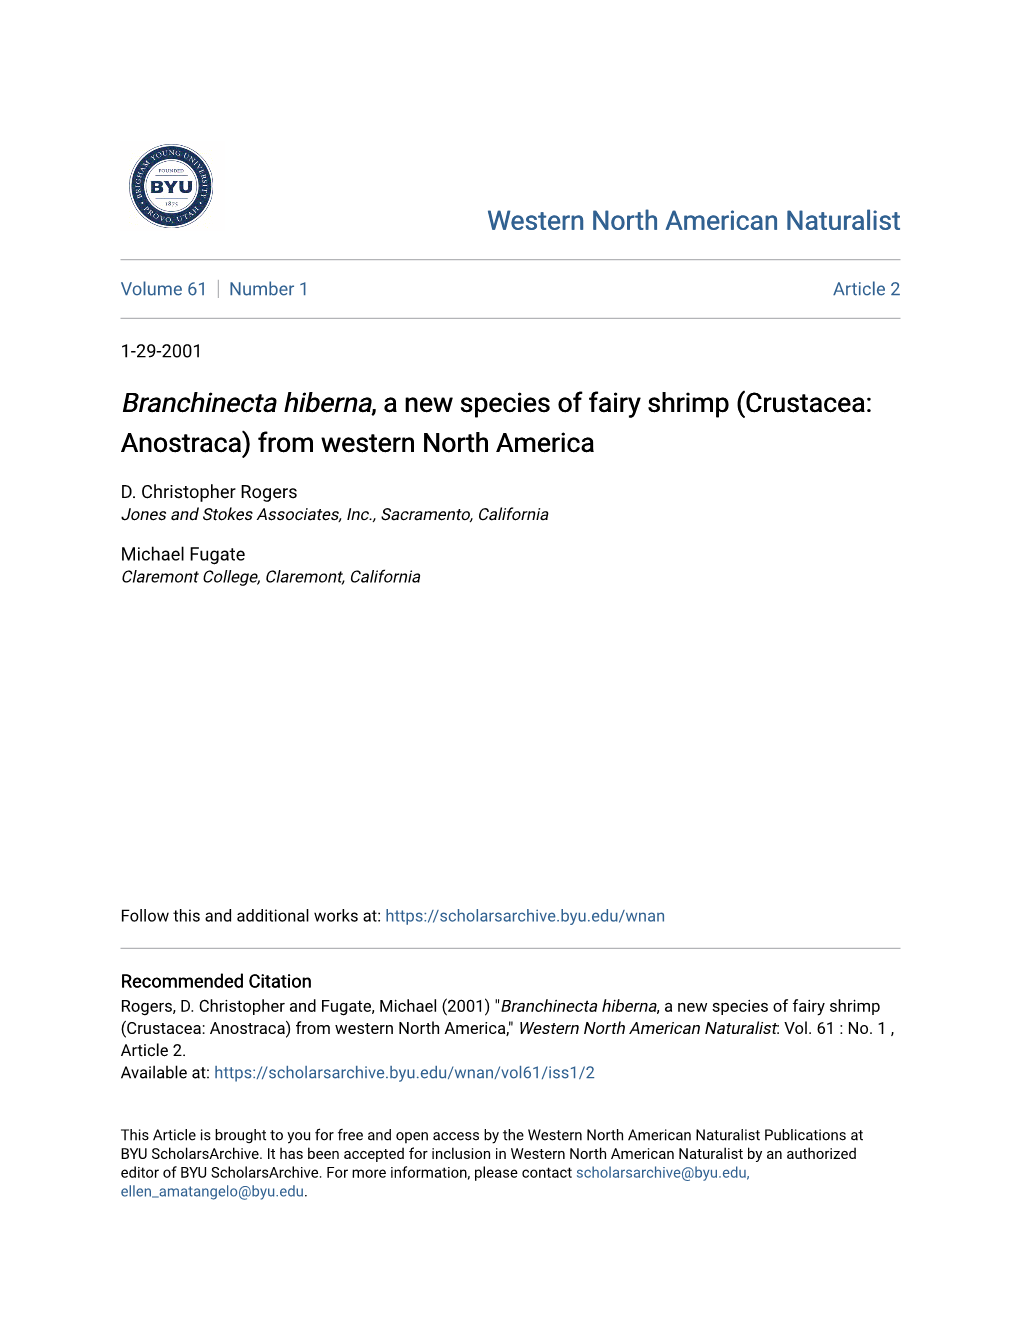 Crustacea: Anostraca) from Western North America